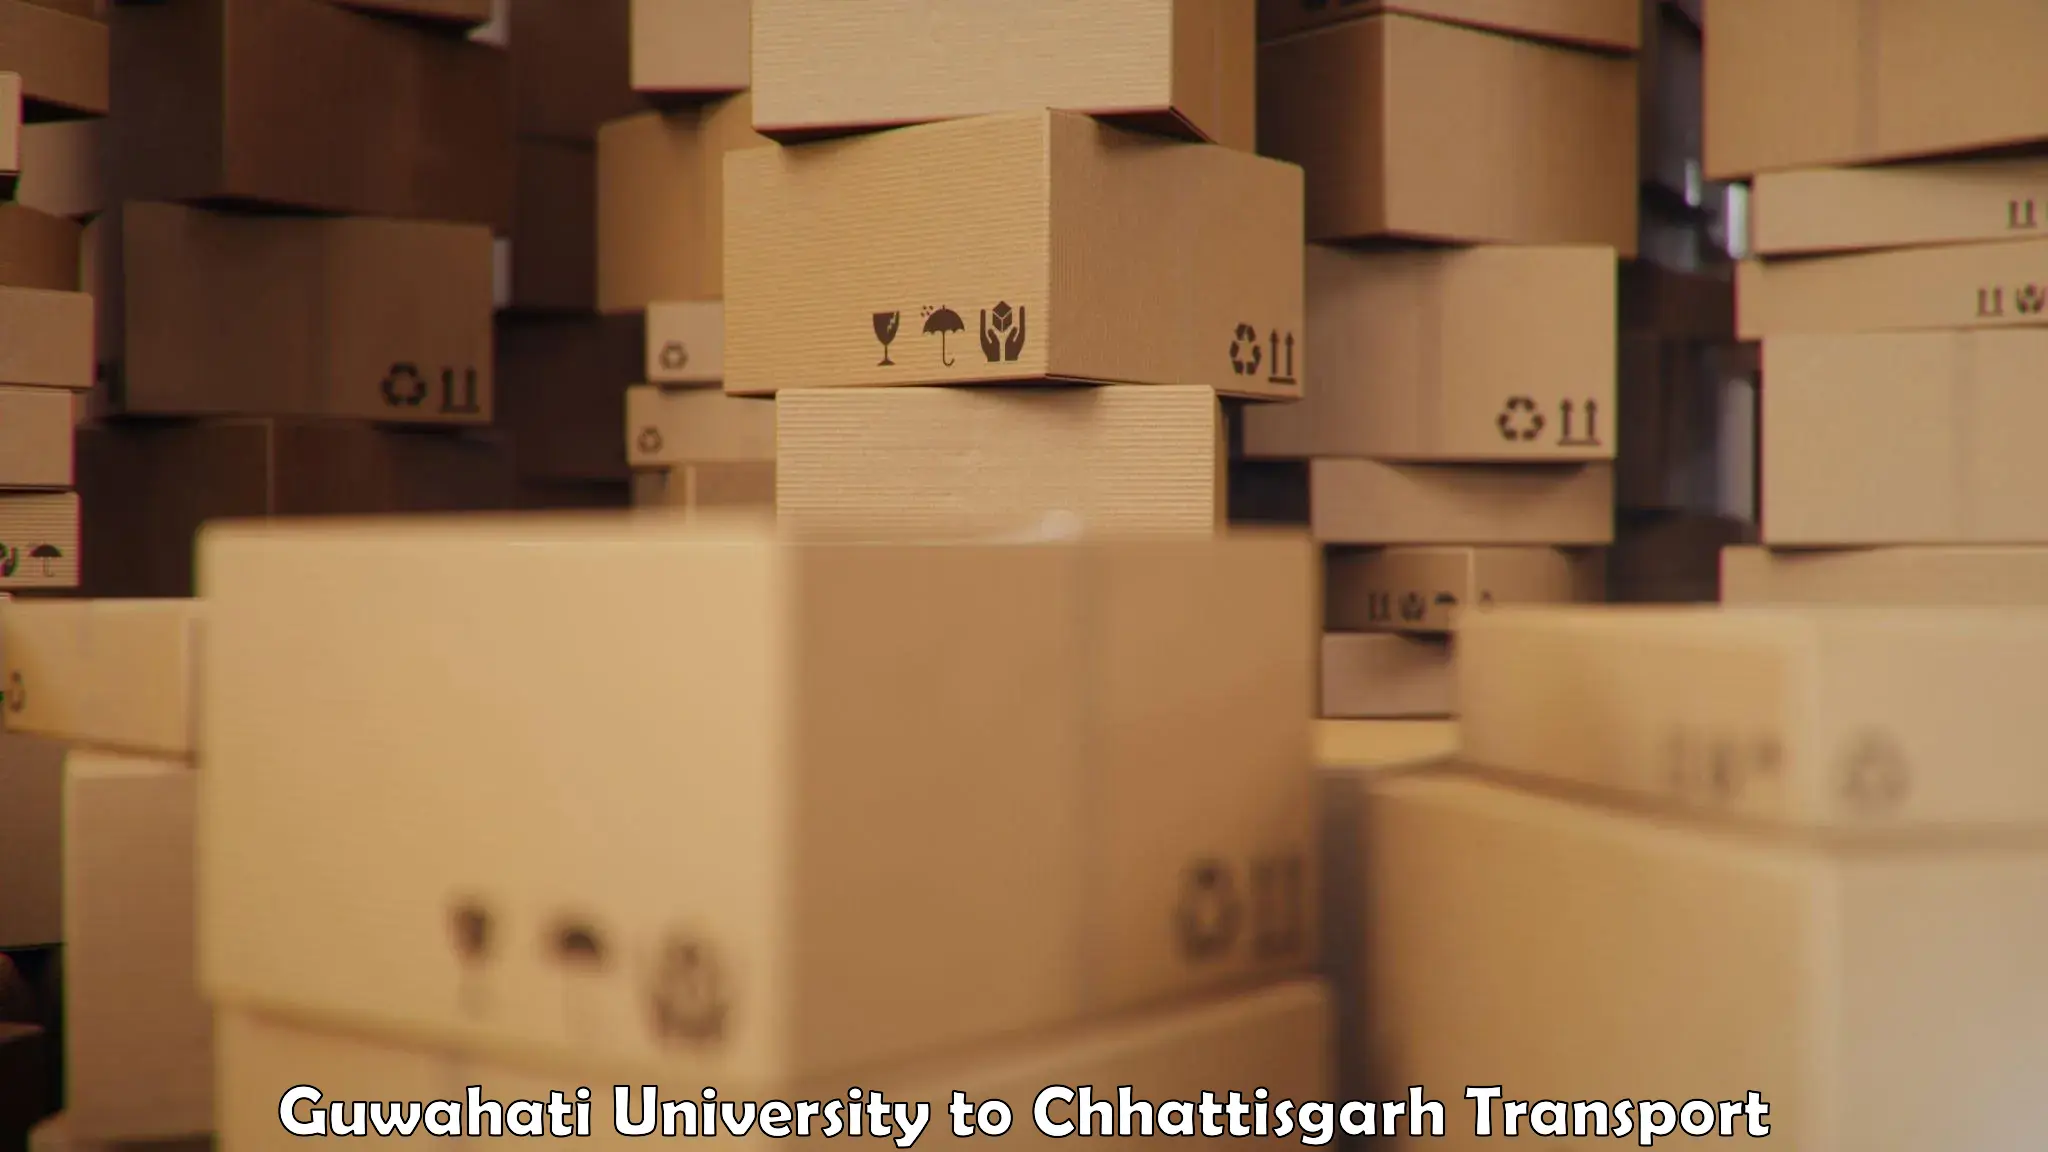 Commercial transport service Guwahati University to Pakhanjur